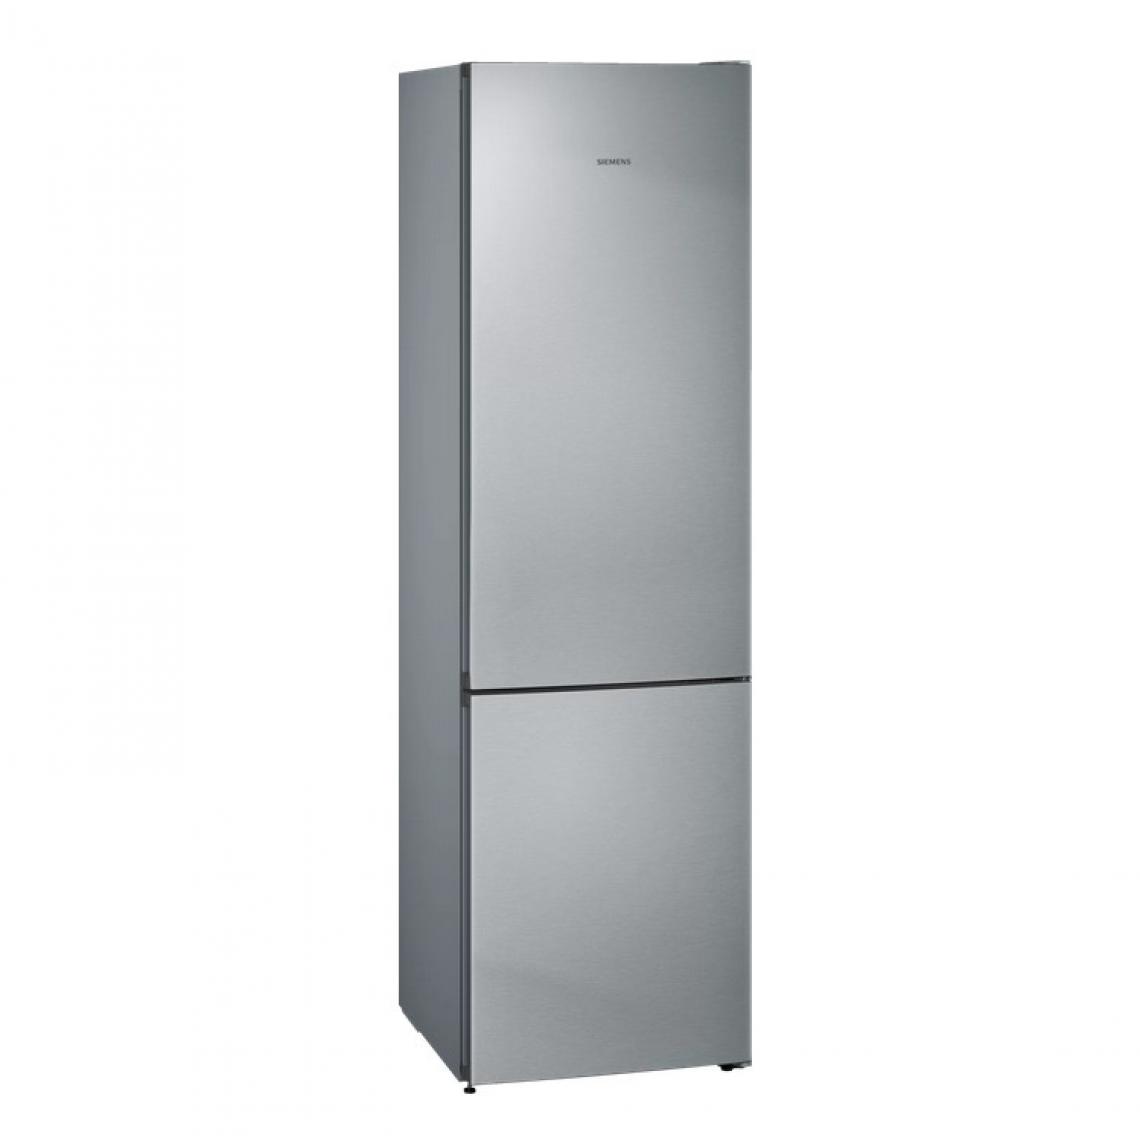 Siemens - siemens - kg39nvied - Réfrigérateur